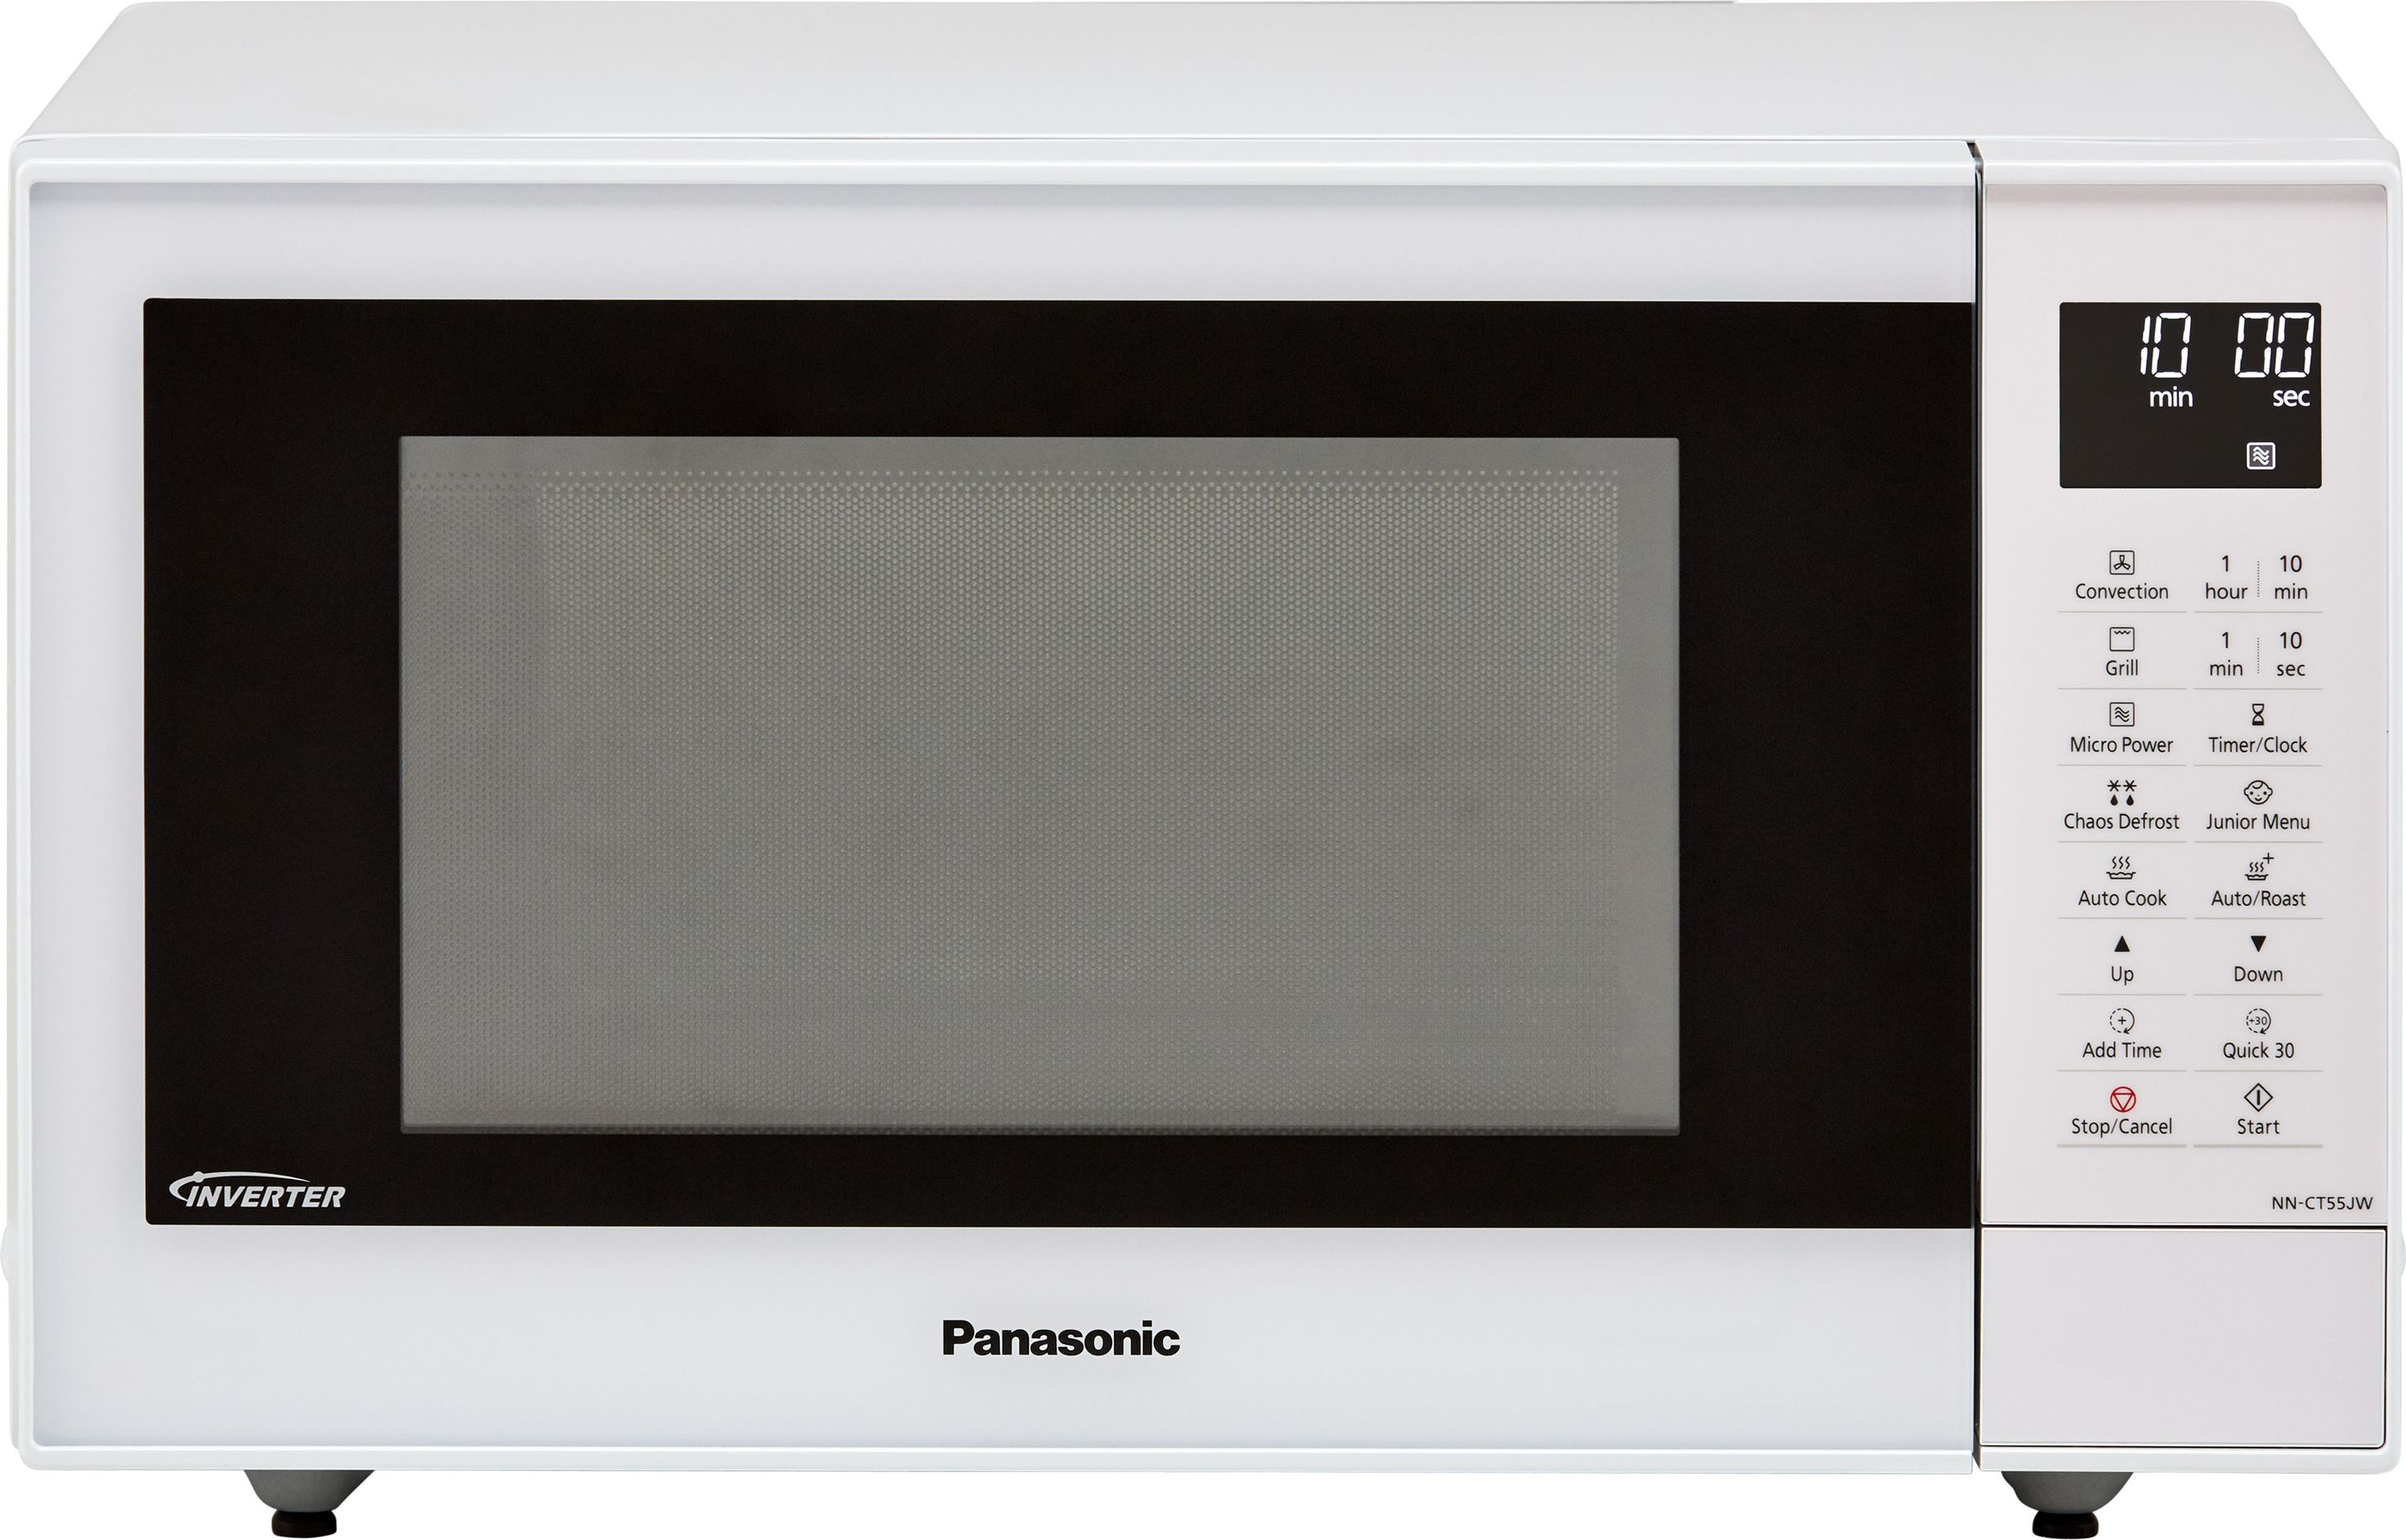 Panasonic NN-CT55JWBPQ Freestanding 31cm Tall Microwave - White, White